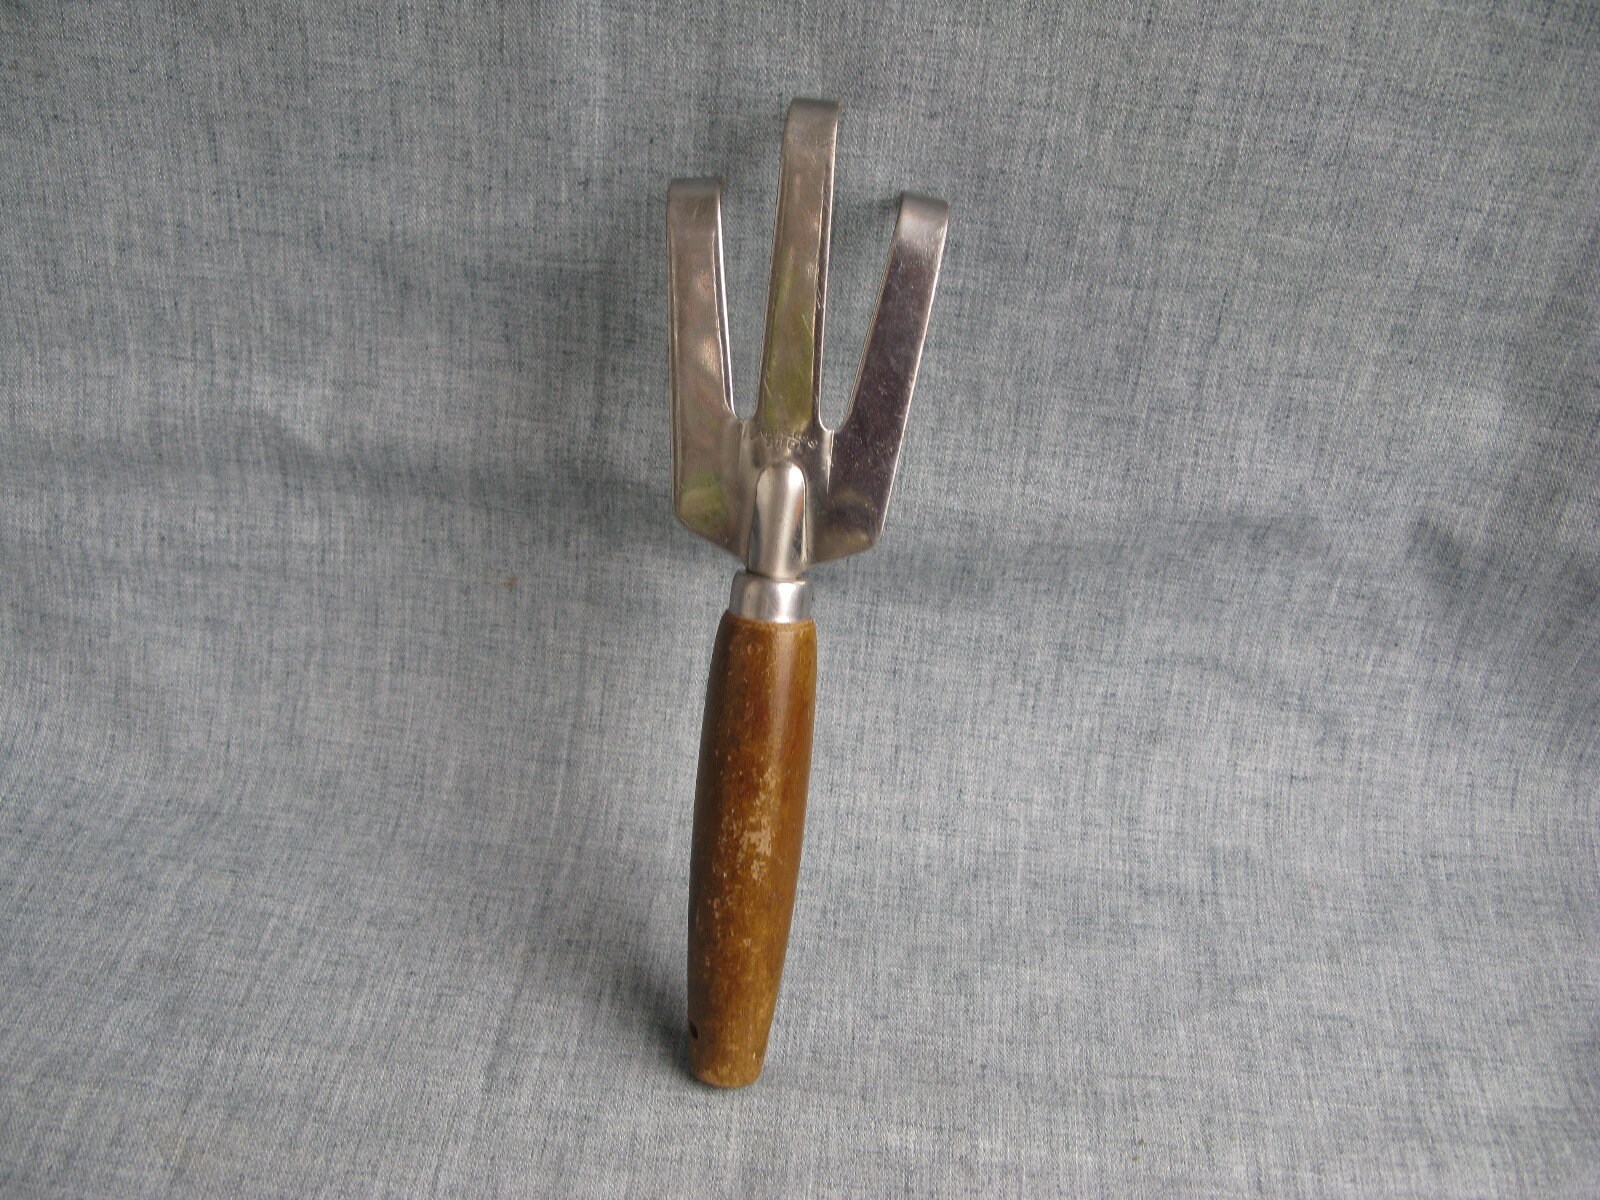 Vintage Garden Rake 3 Prong Cultivator Hand Tool Wood Handle